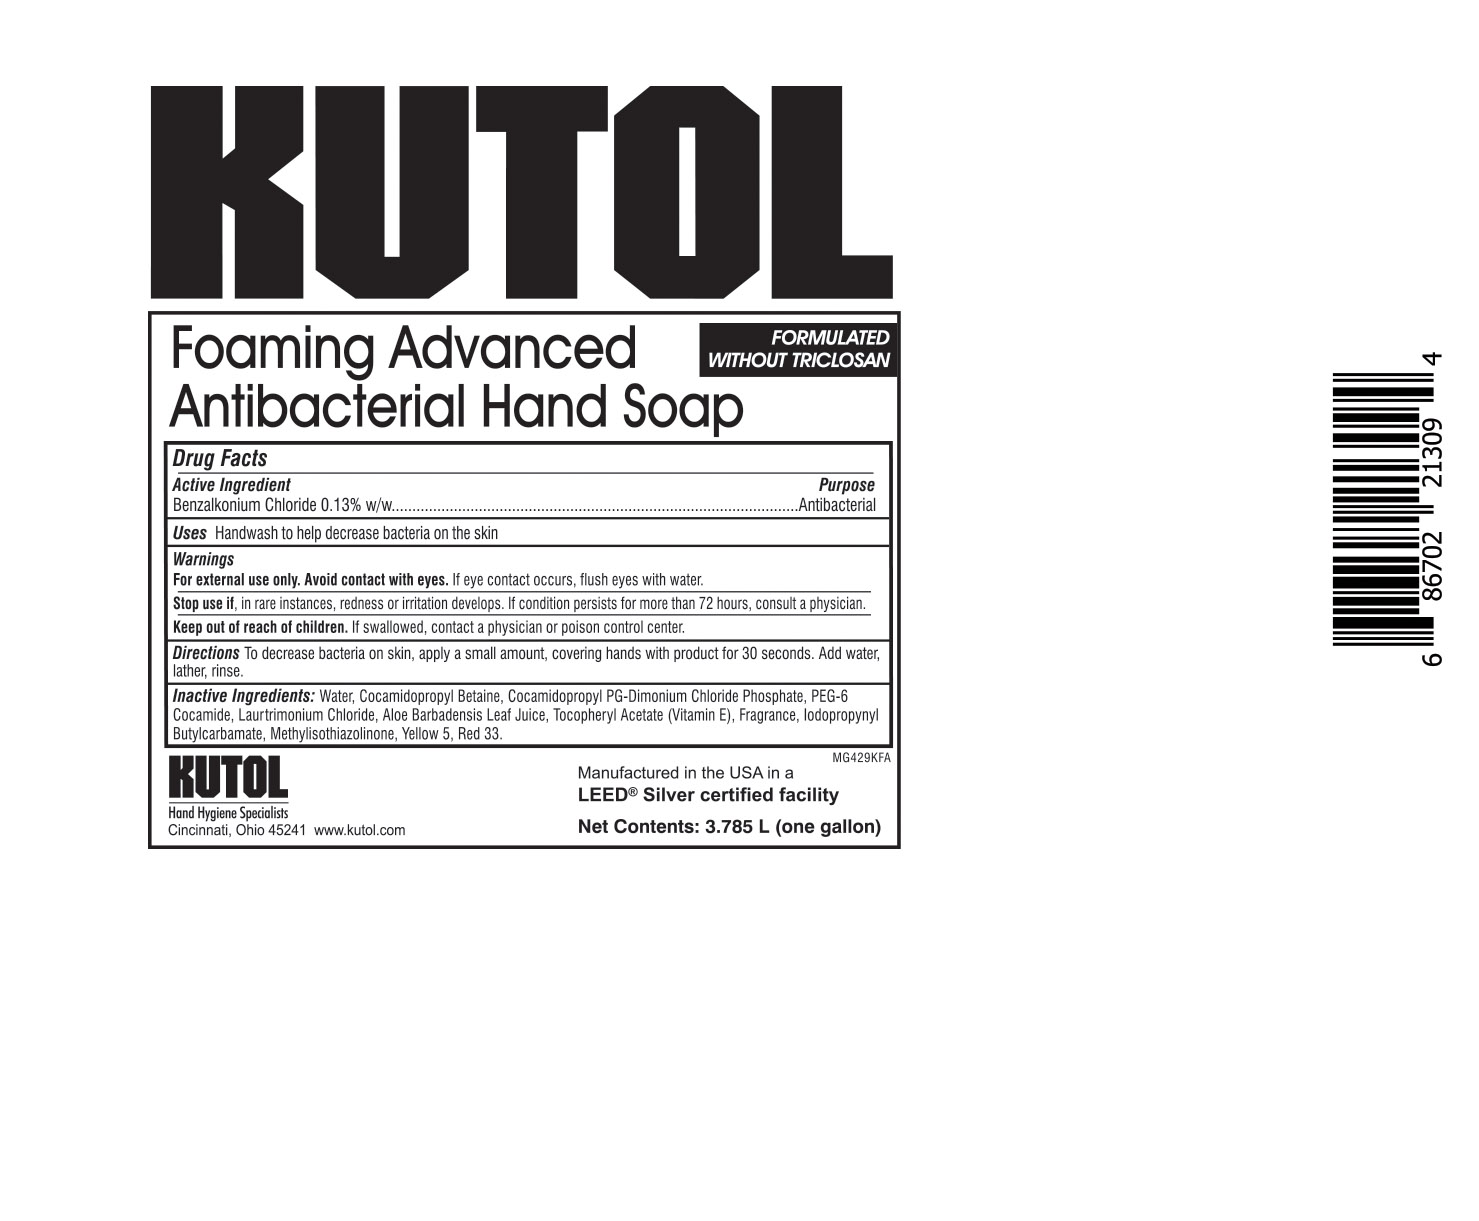 Foaming Advanced Antibacterial Hand | Benzalkonium Chloride Soap and breastfeeding